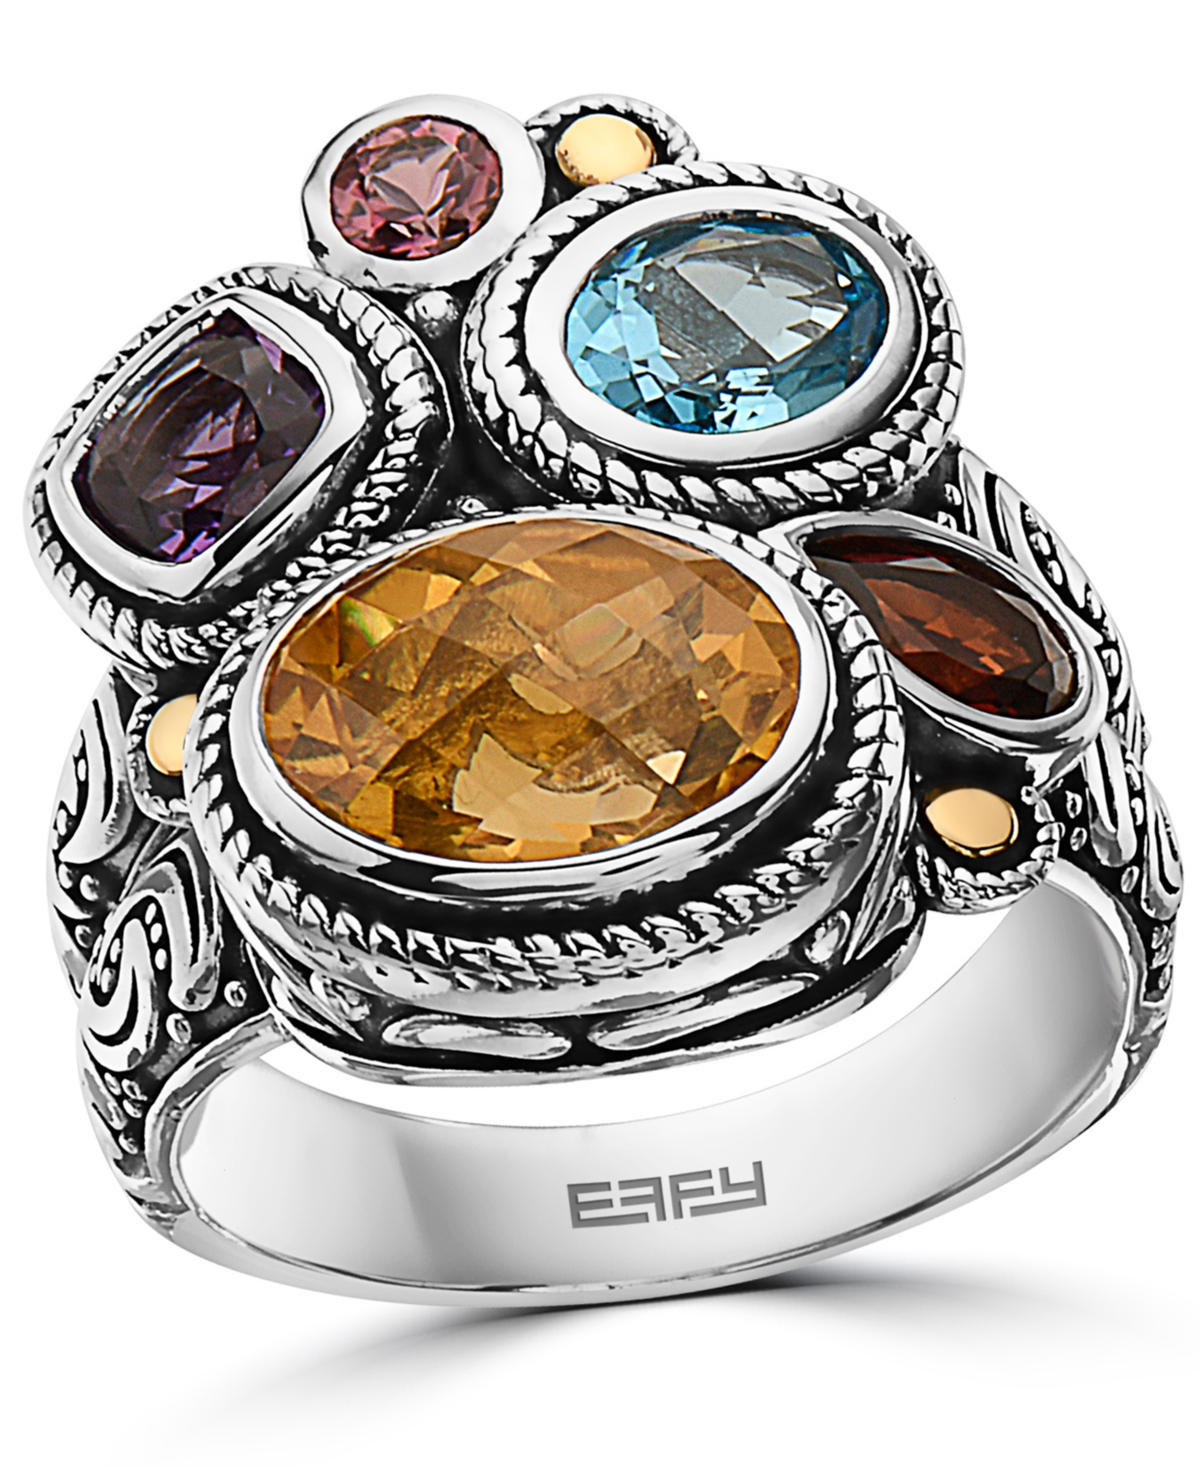 Effy Multi-Gemstone Statement Ring (4-3/4 ct. t.w.) in Sterling Silver & 18k Gold - Multi-gemstone